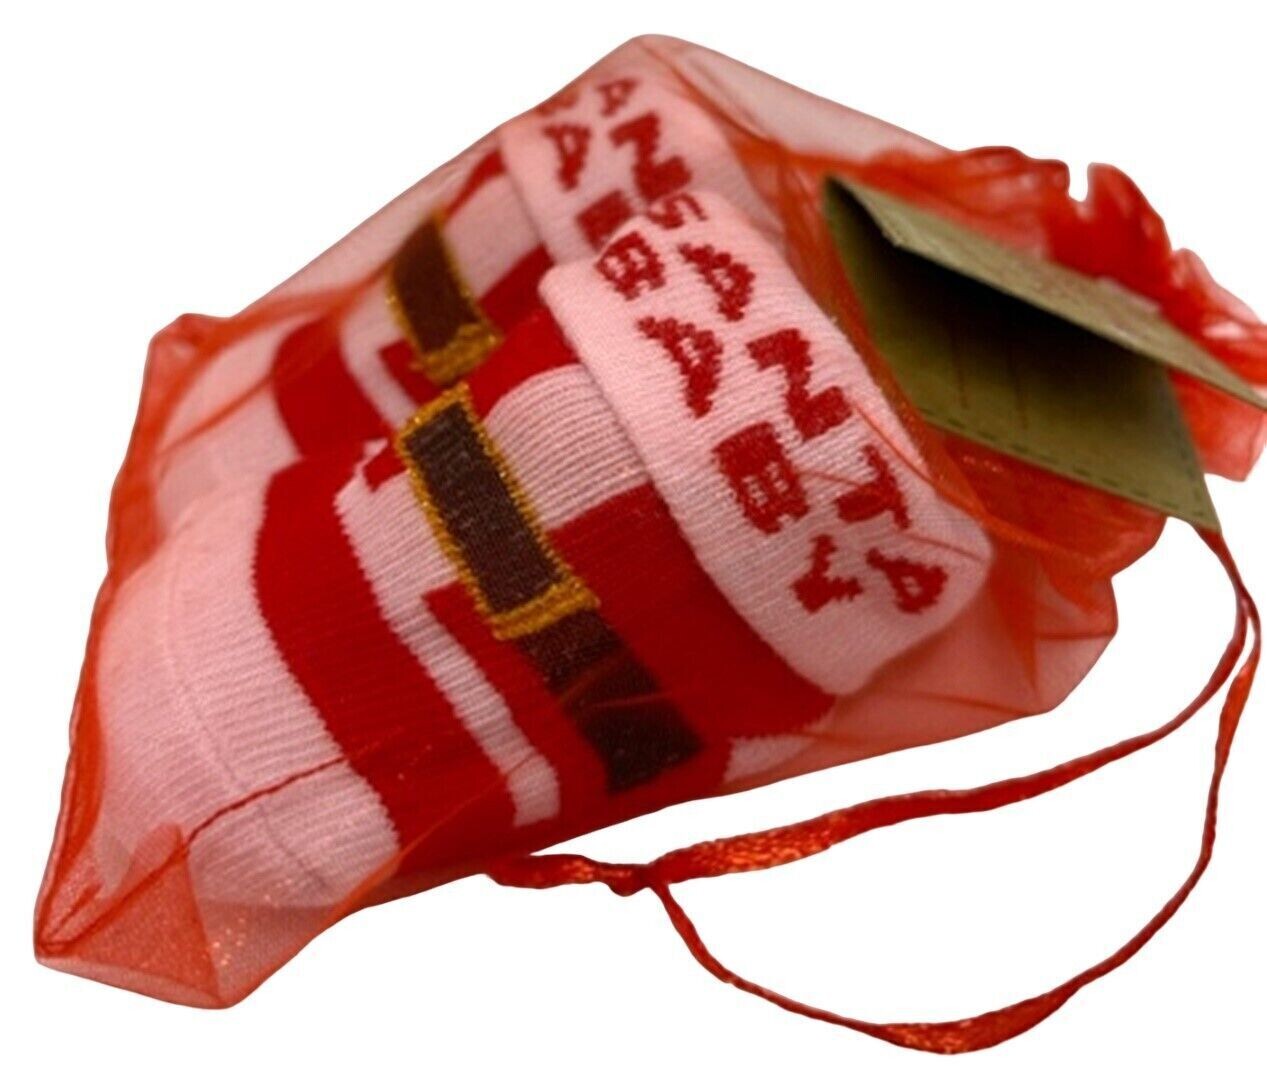 2 pairs Baby Christmas Bootees (Santa Baby) size 6-12m
Novelty in Organza Bags